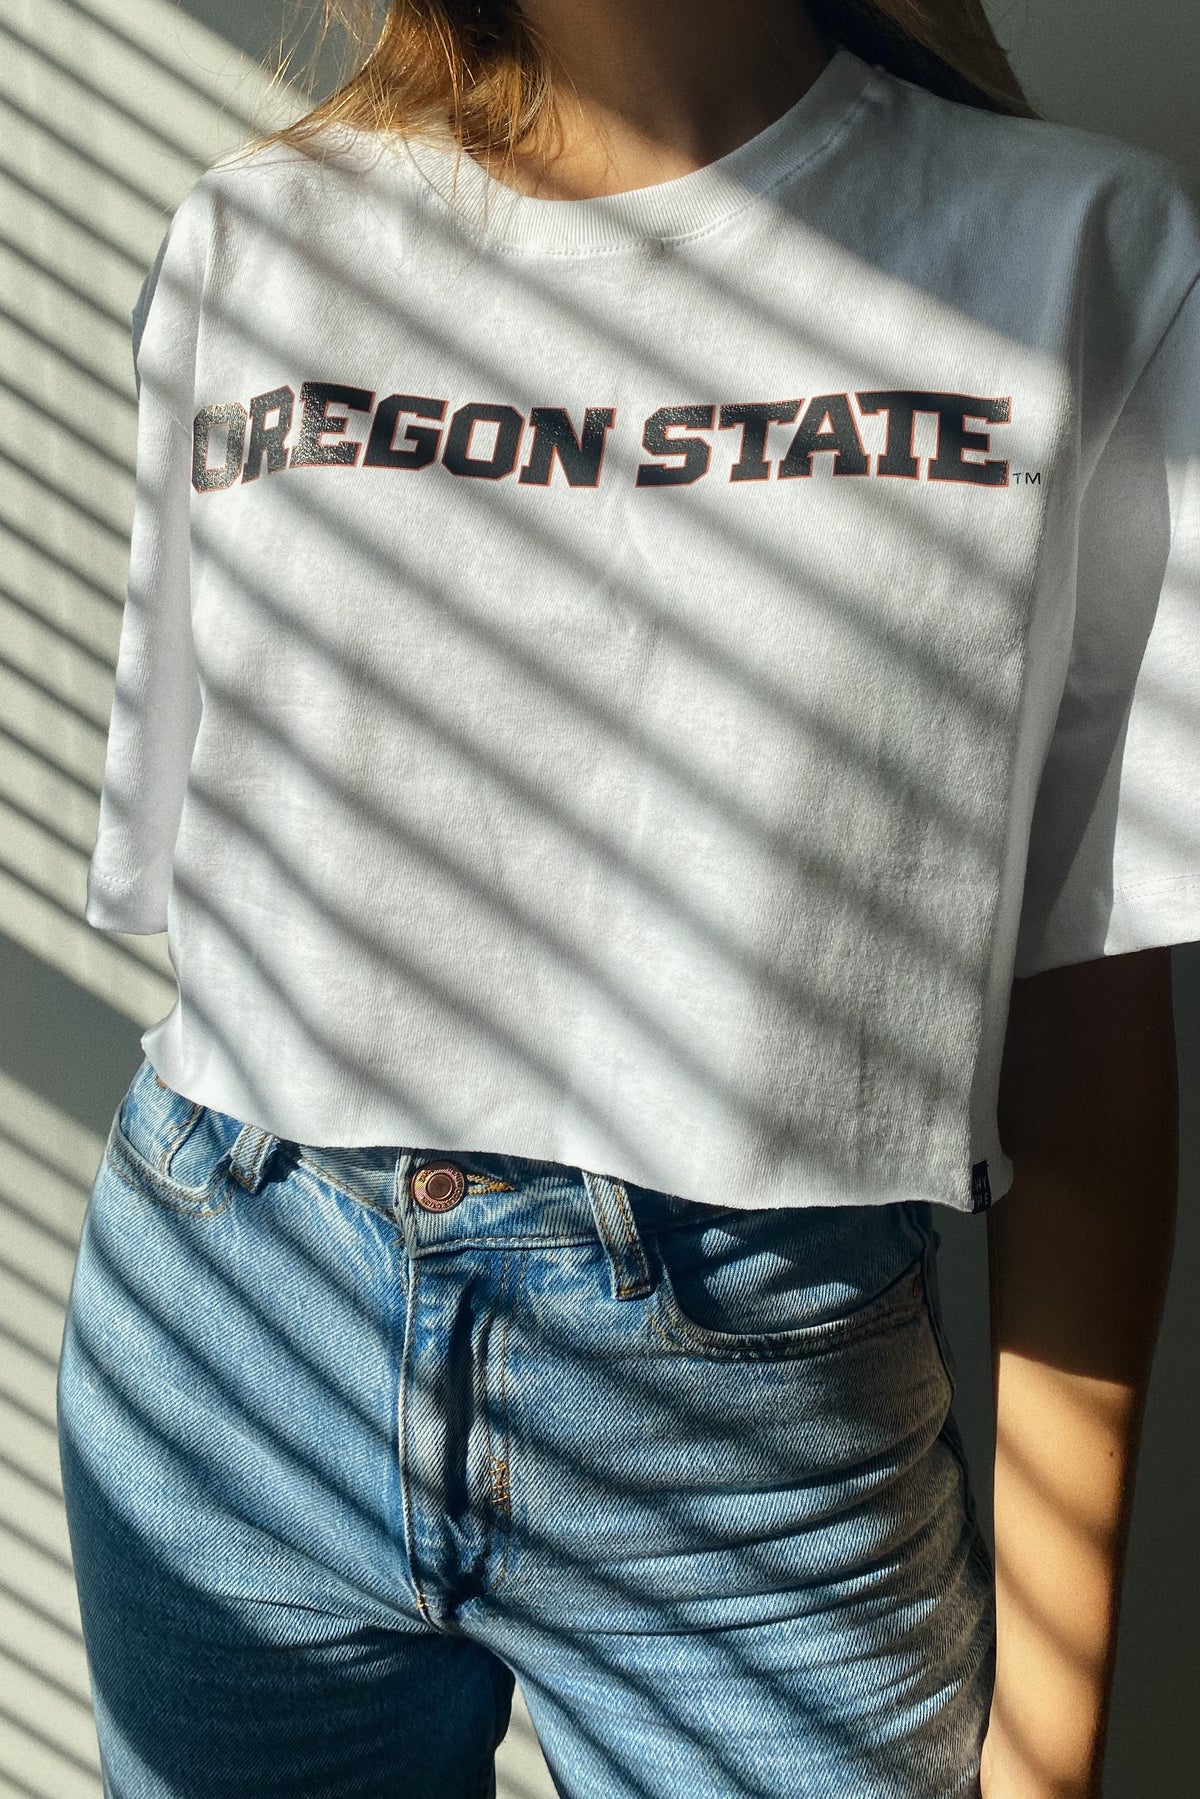 Oregon State Touchdown Tee